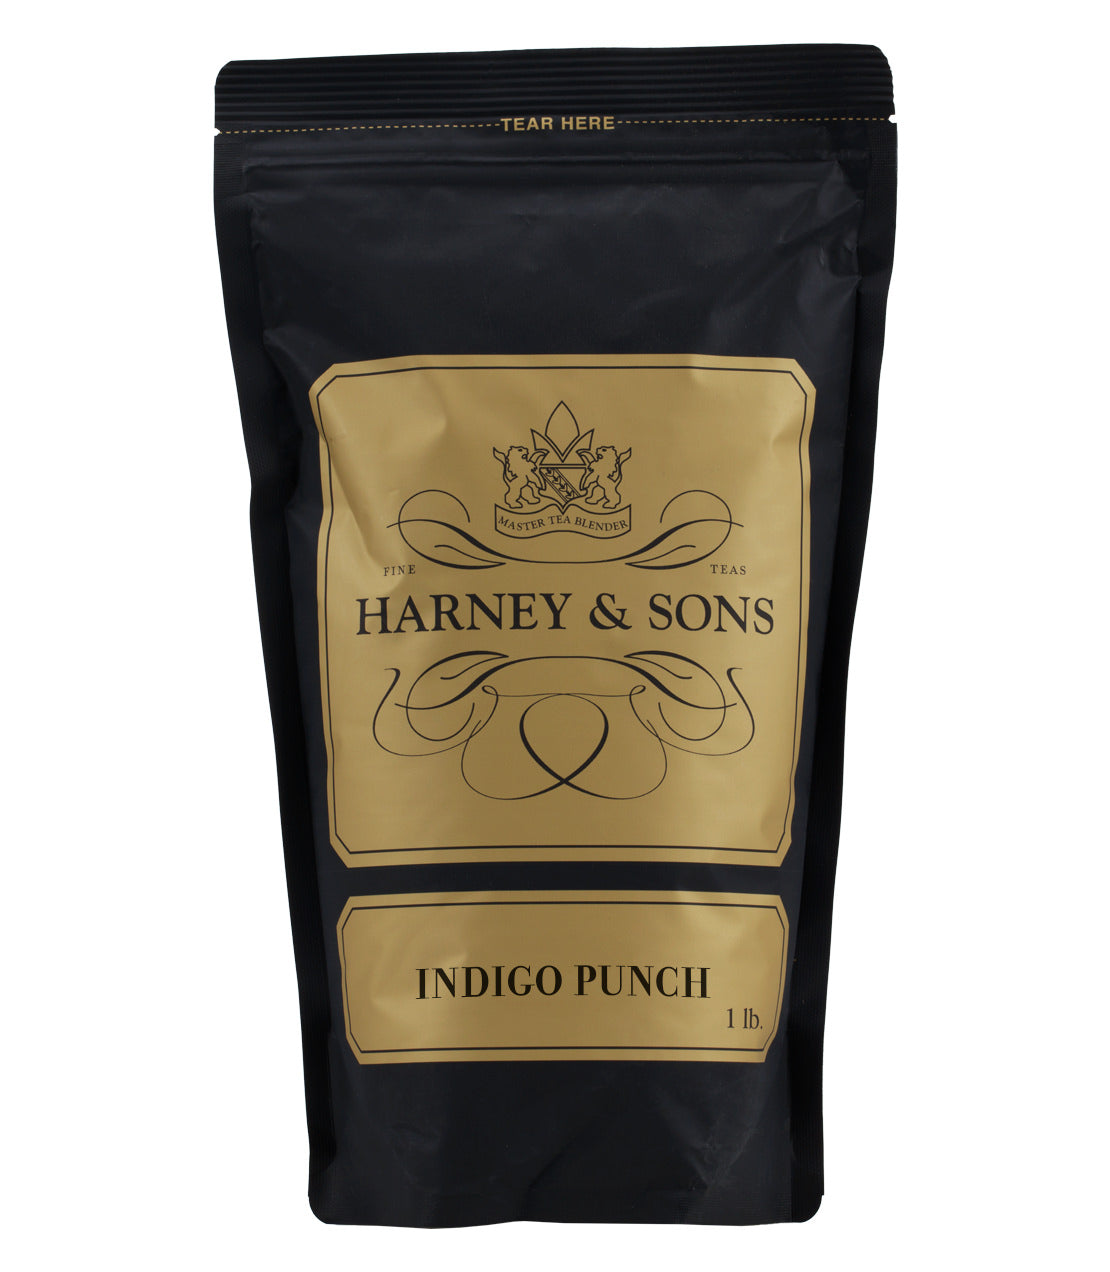 Indigo Punch - Loose 1 lb. Bag - Harney & Sons Fine Teas